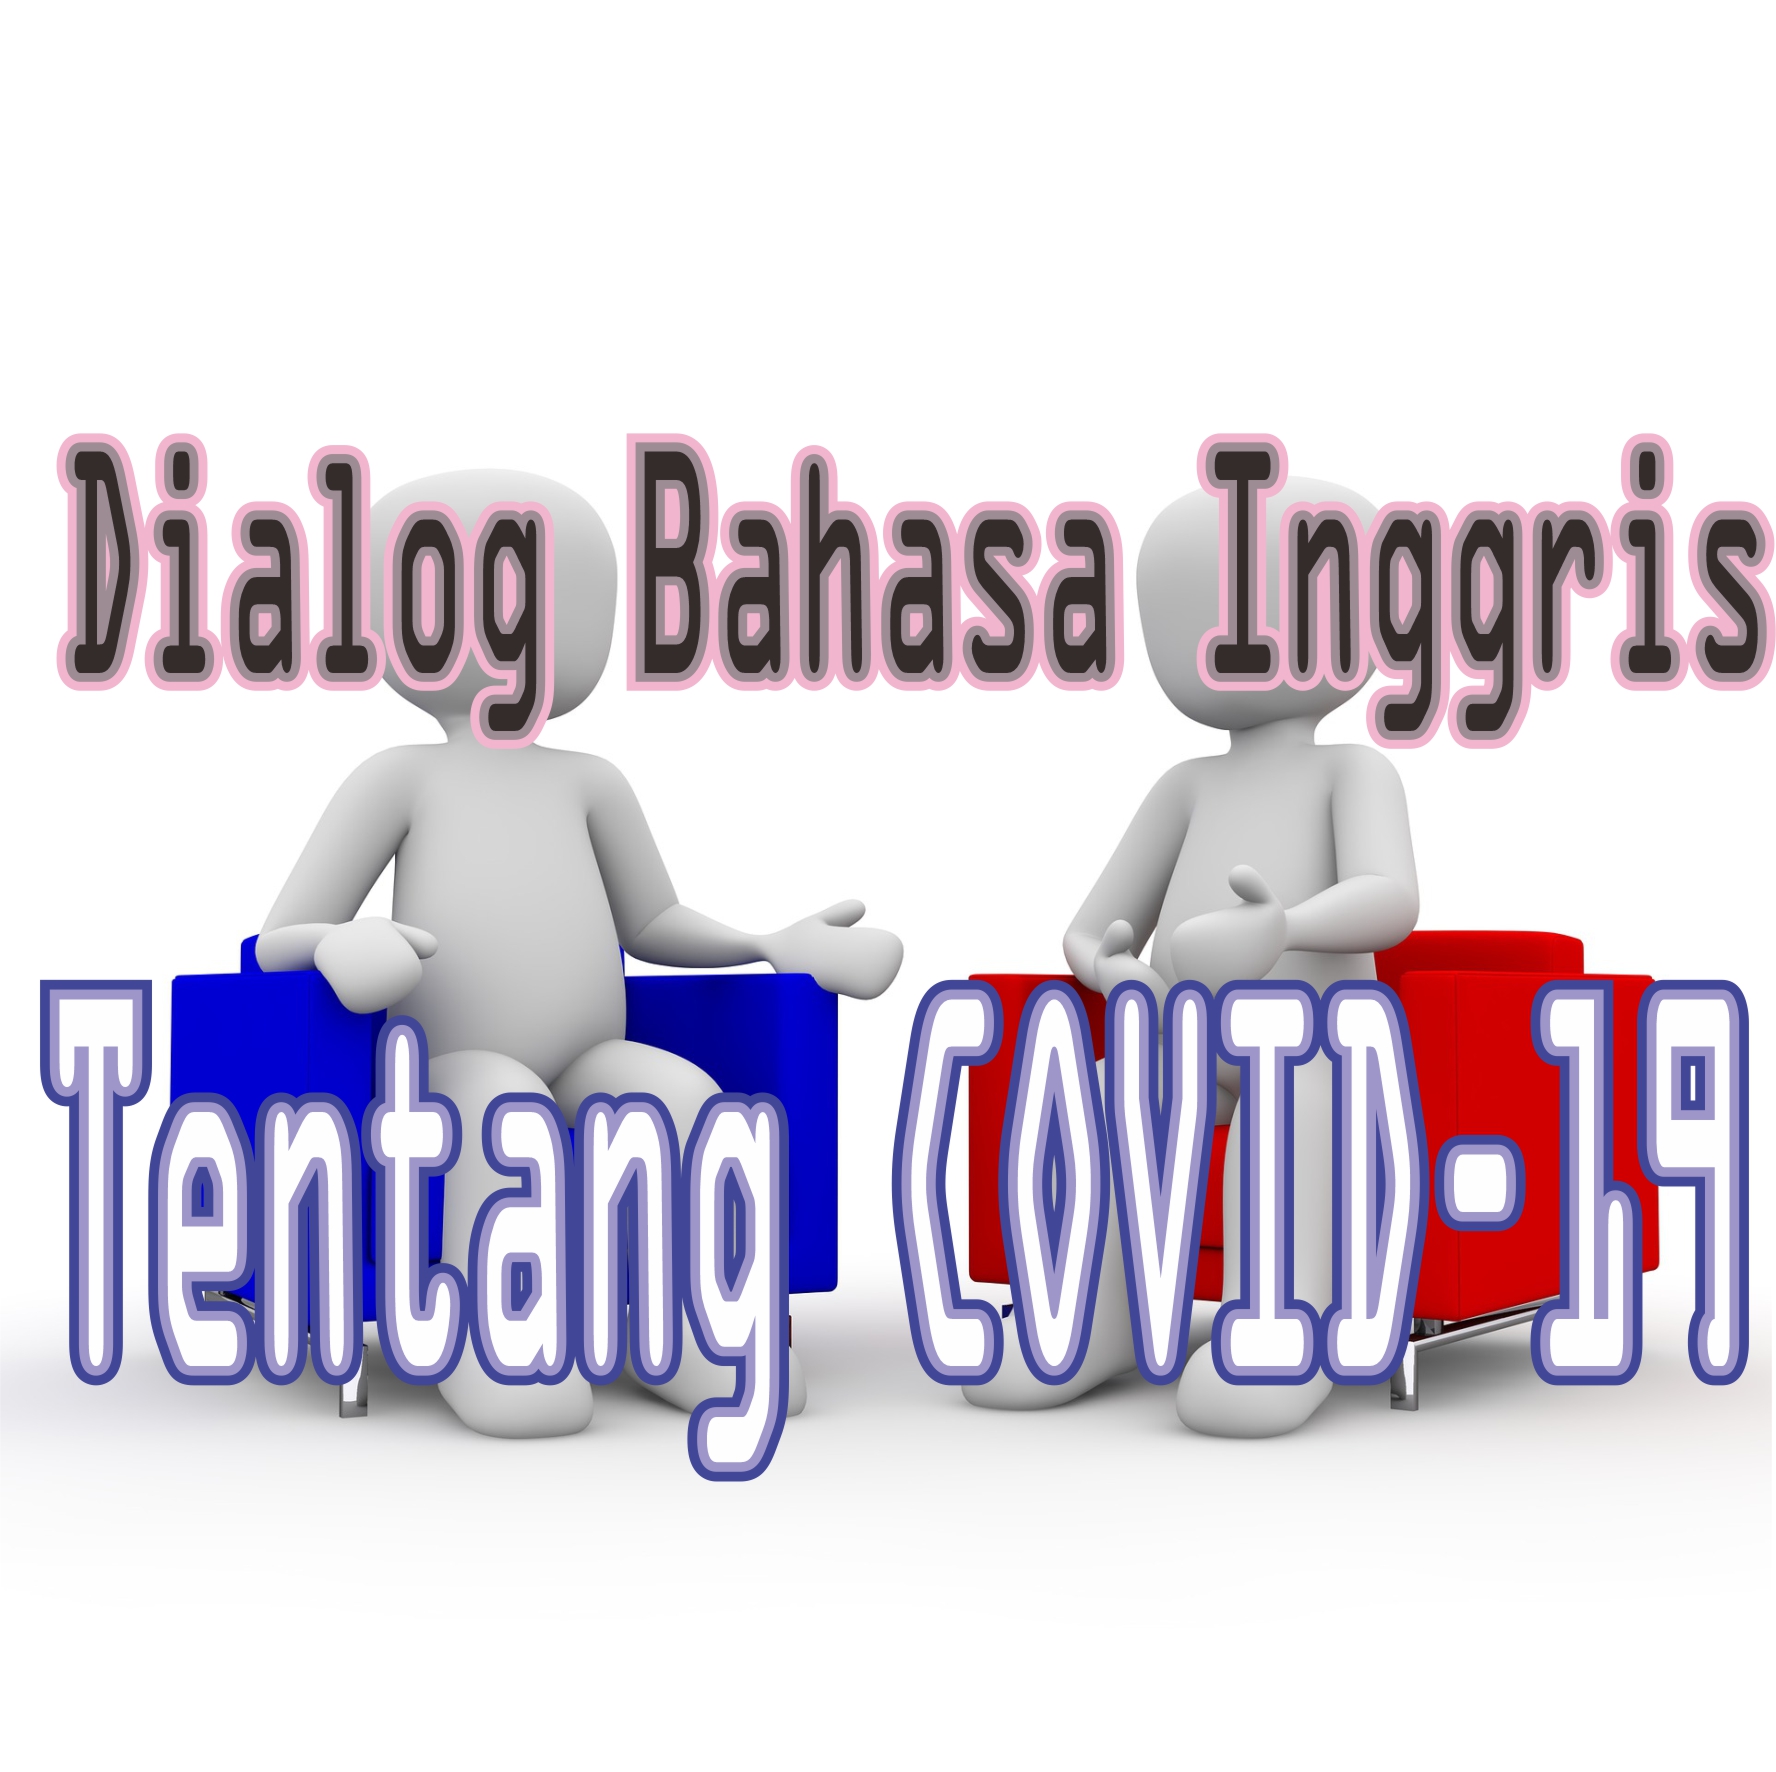 Dialog Bahasa Inggris Tentang Covid-19